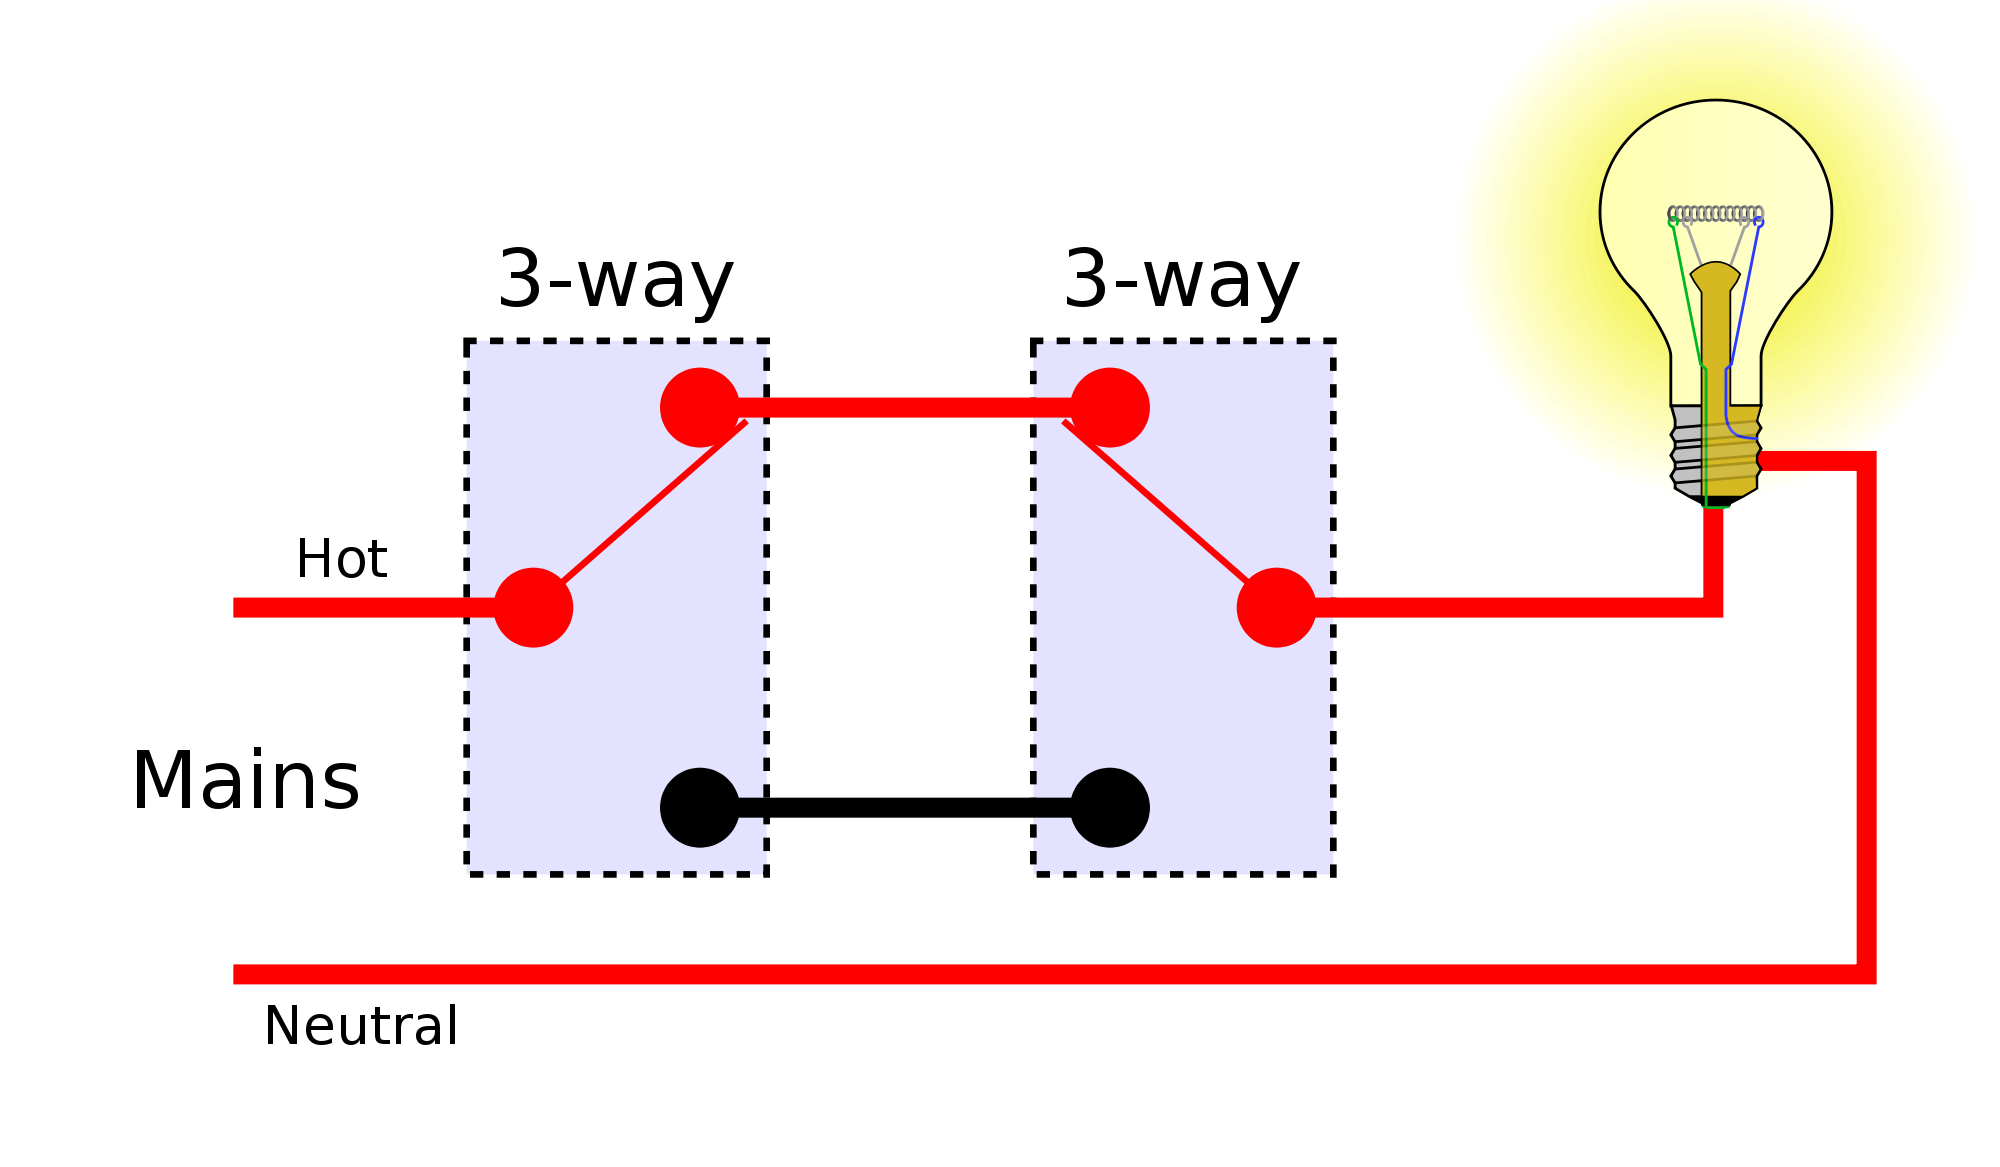 crabtree light switches wiring diagram